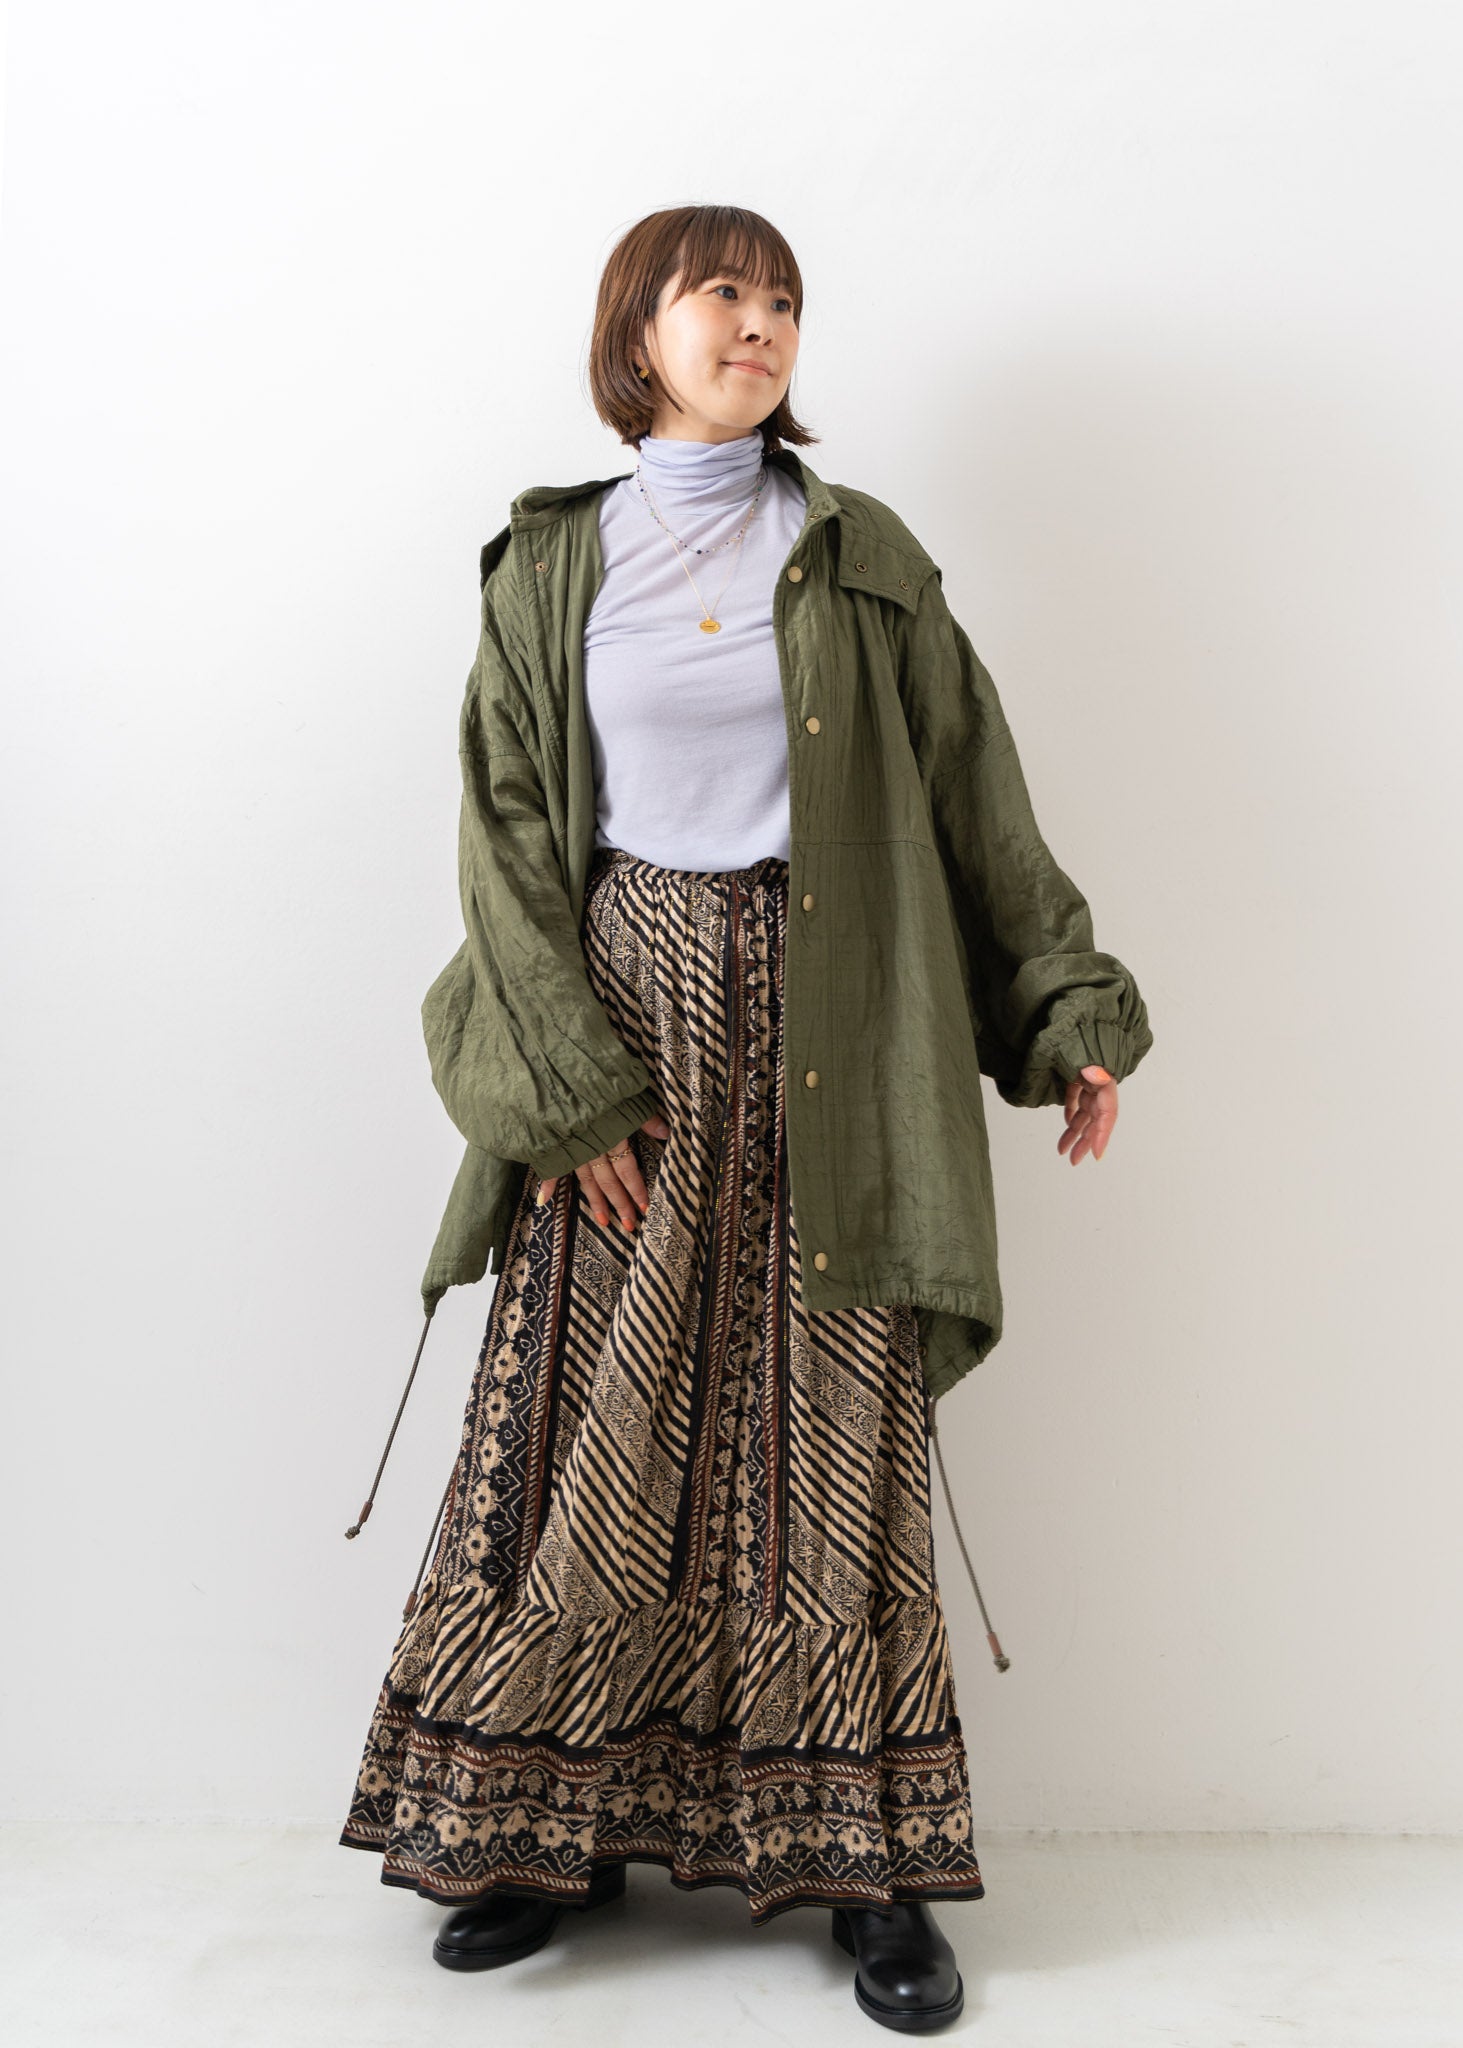 Cotton Stripe Ethnic Print Skirt